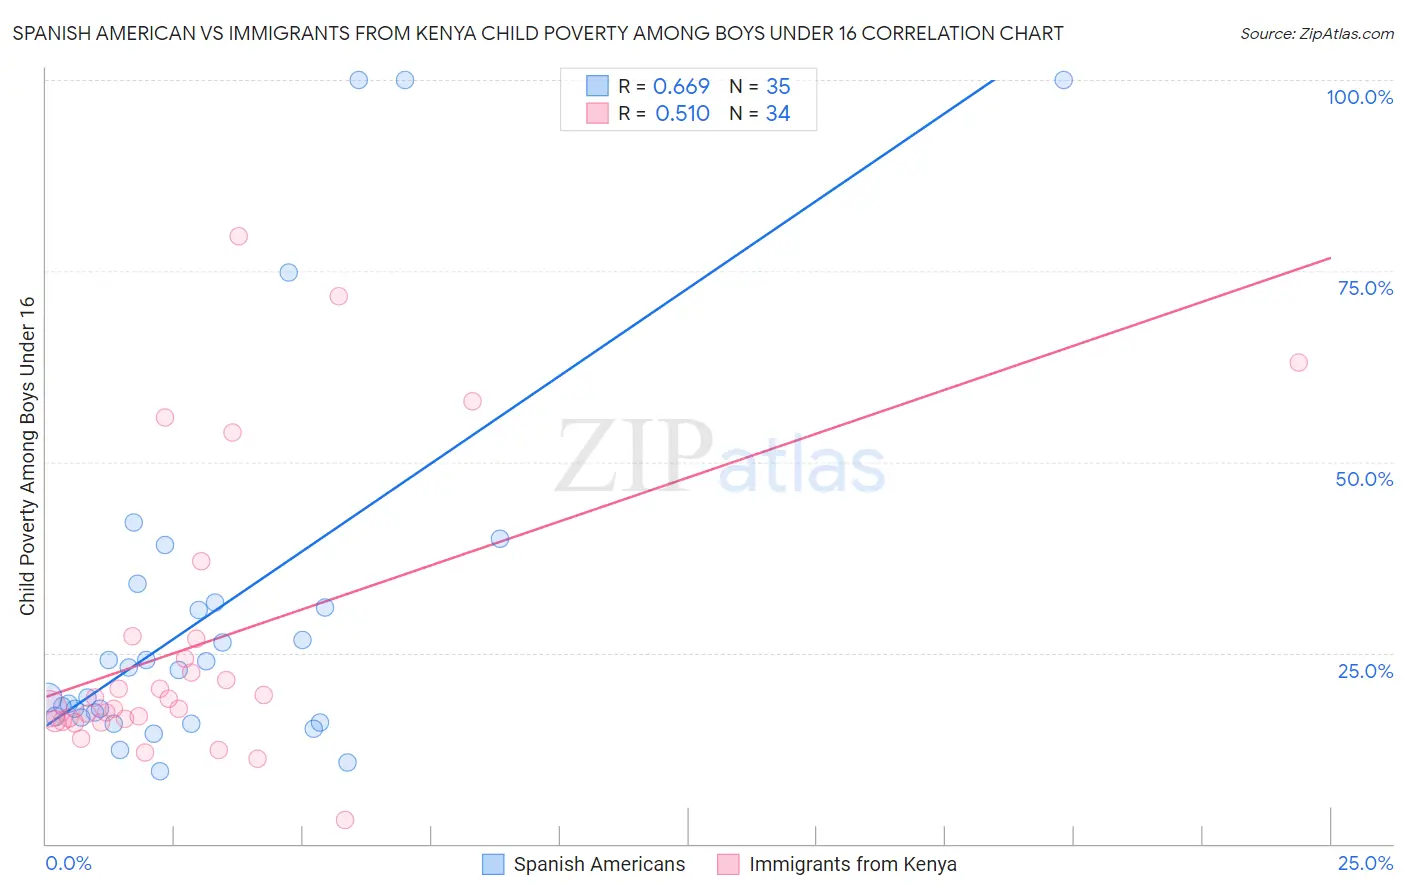 Spanish American vs Immigrants from Kenya Child Poverty Among Boys Under 16